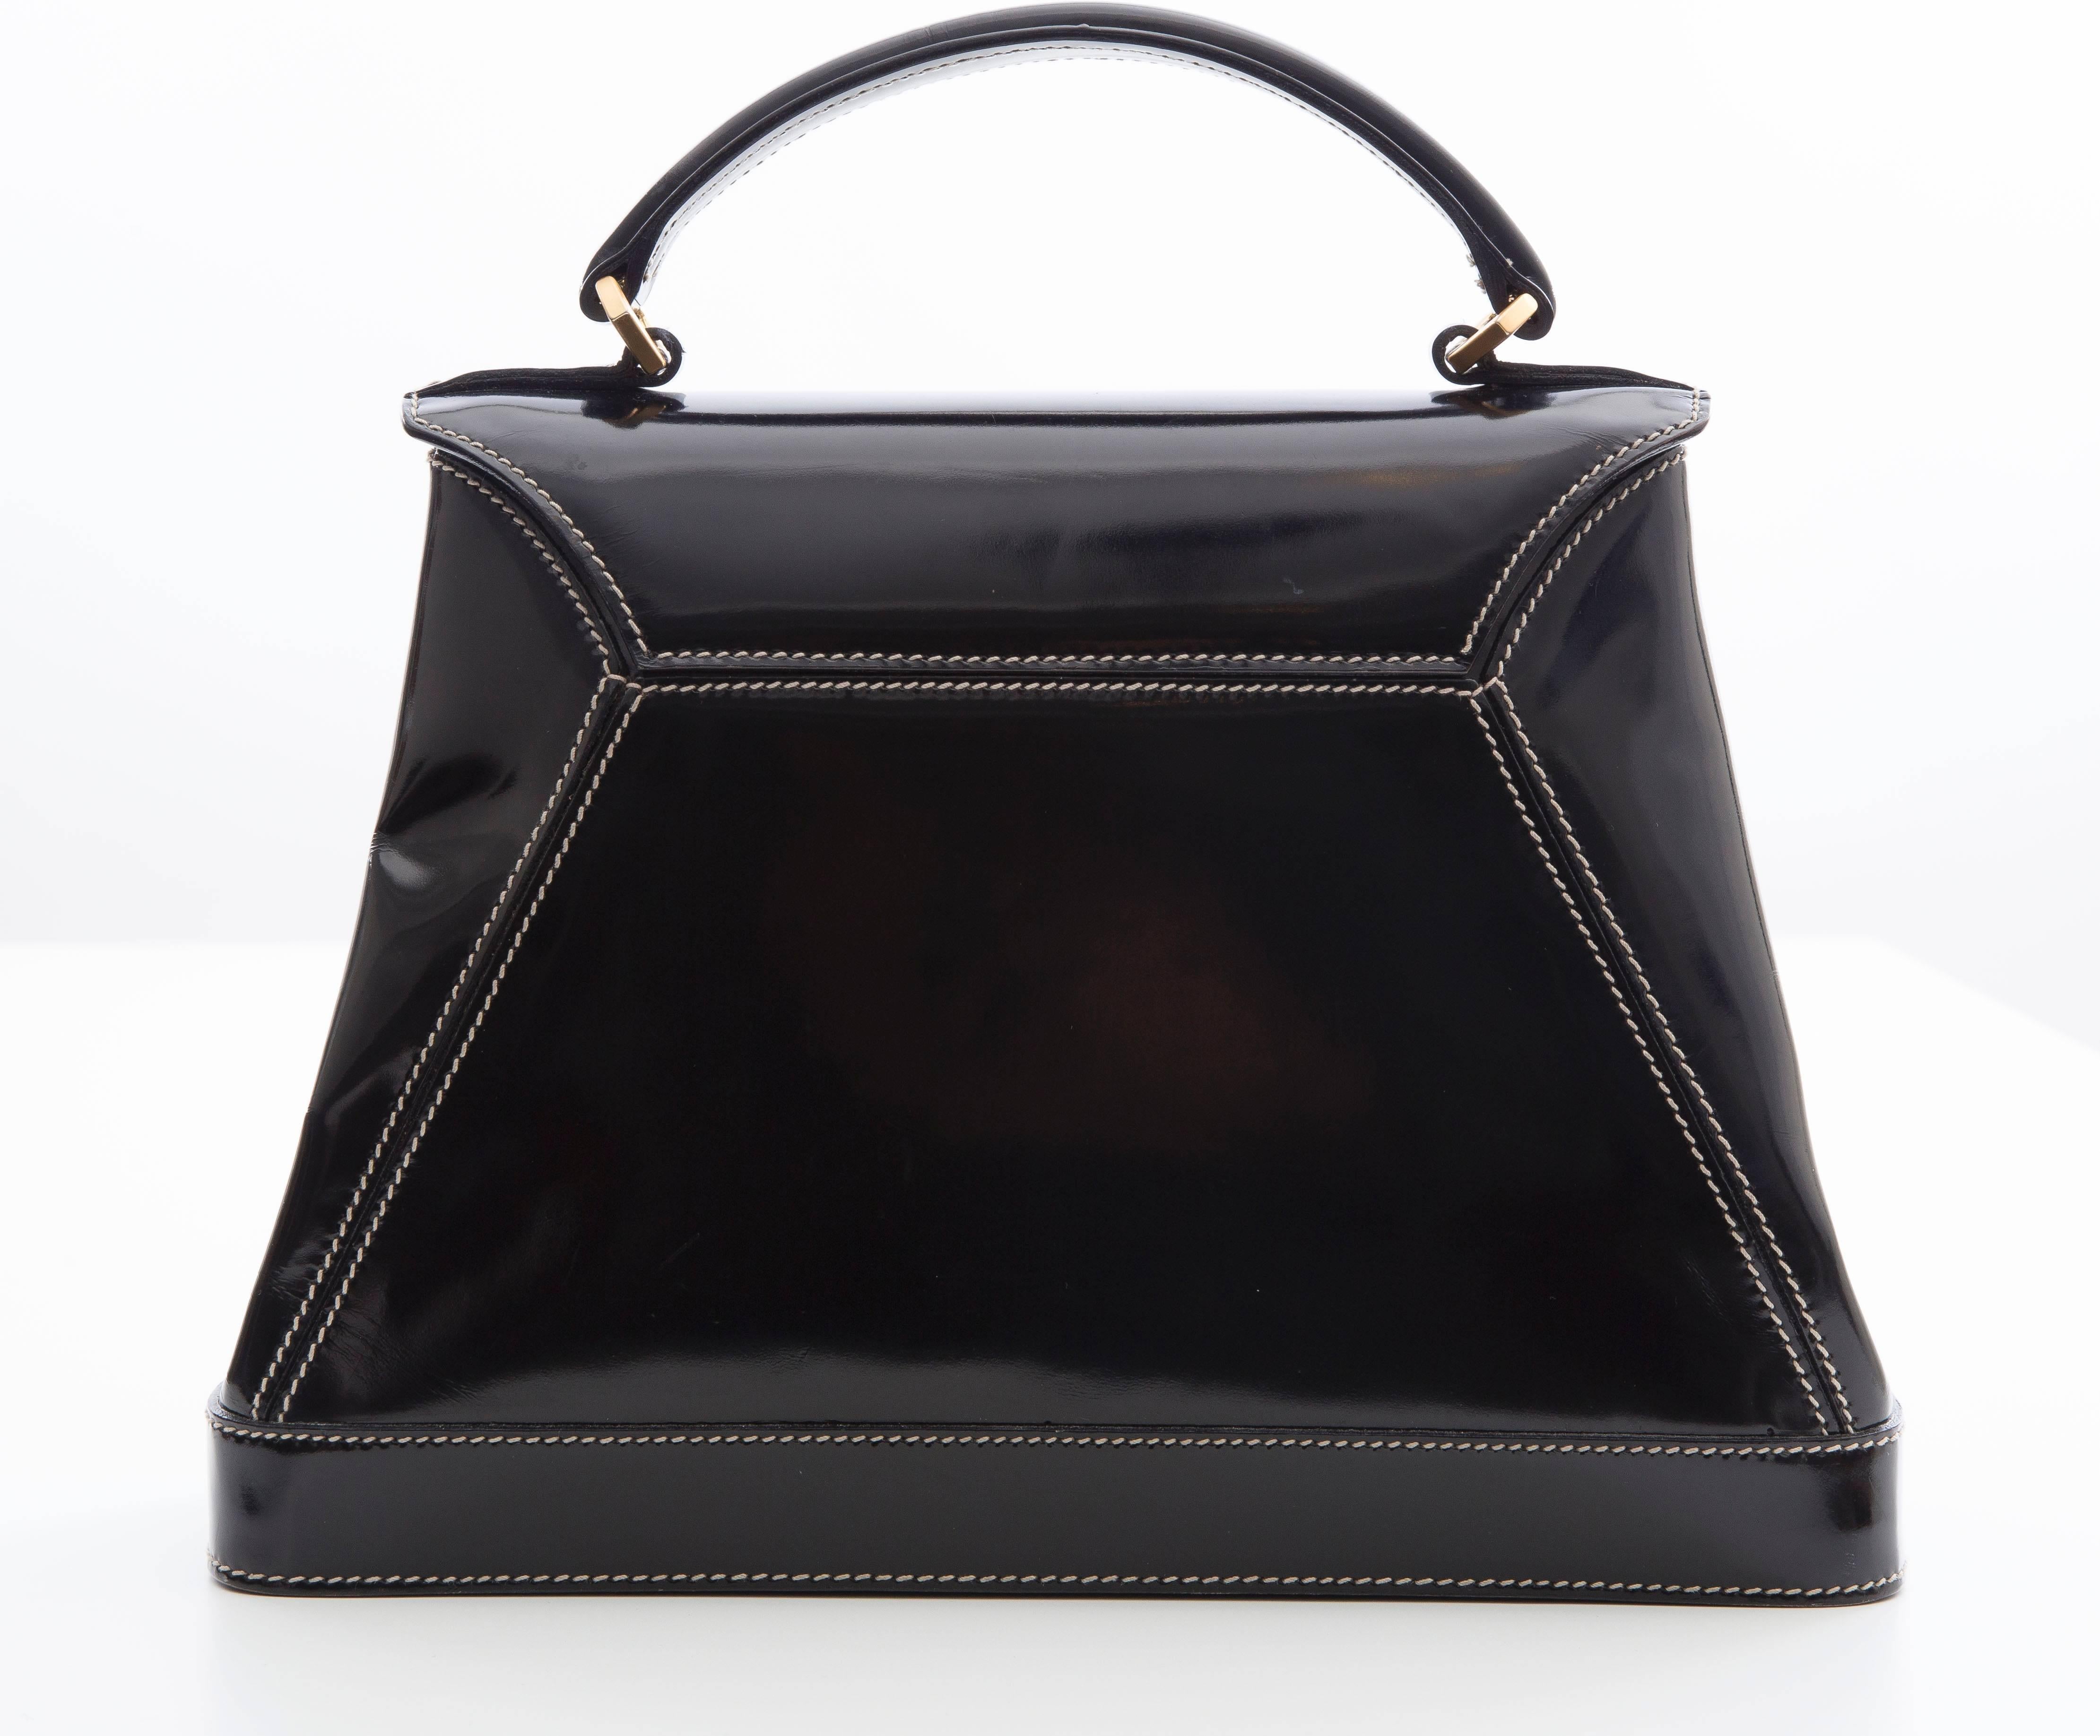 Karl Lagerfeld, circa 1990's, black patent leather handbag, interior zip pocket, detachable shoulder strap and original dust bag.